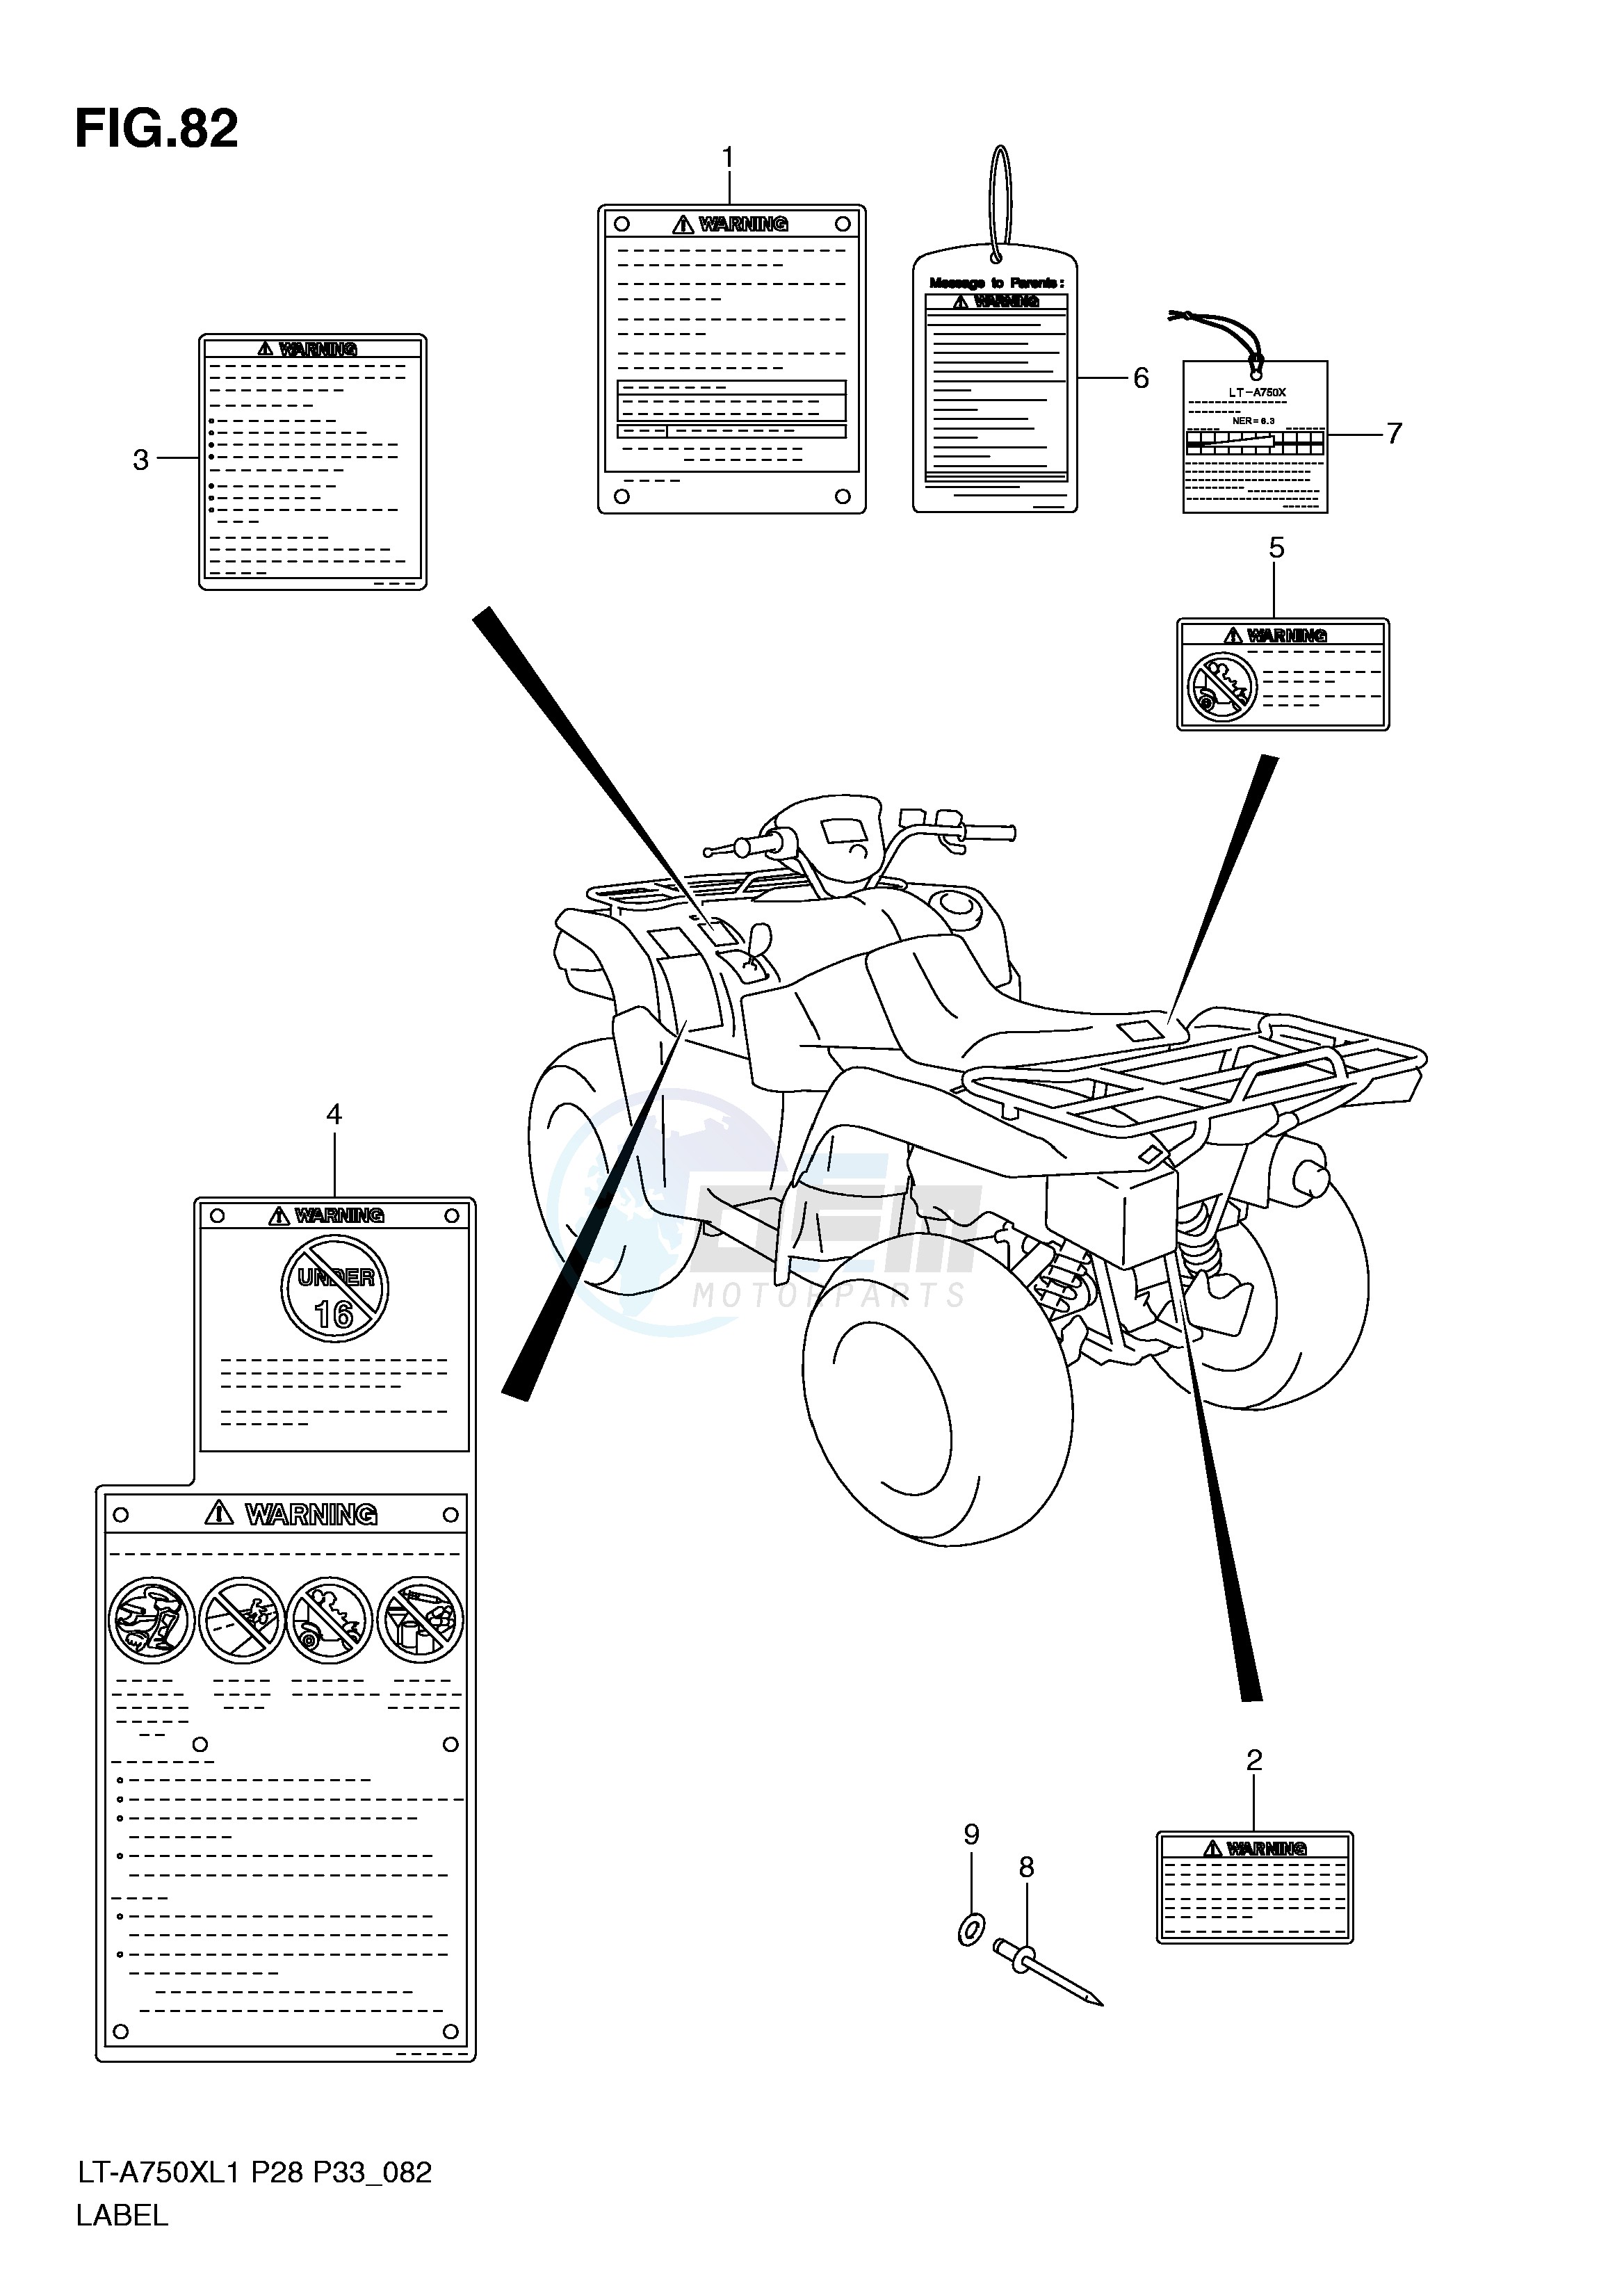 LABEL (LT-A750XL1 P33) blueprint